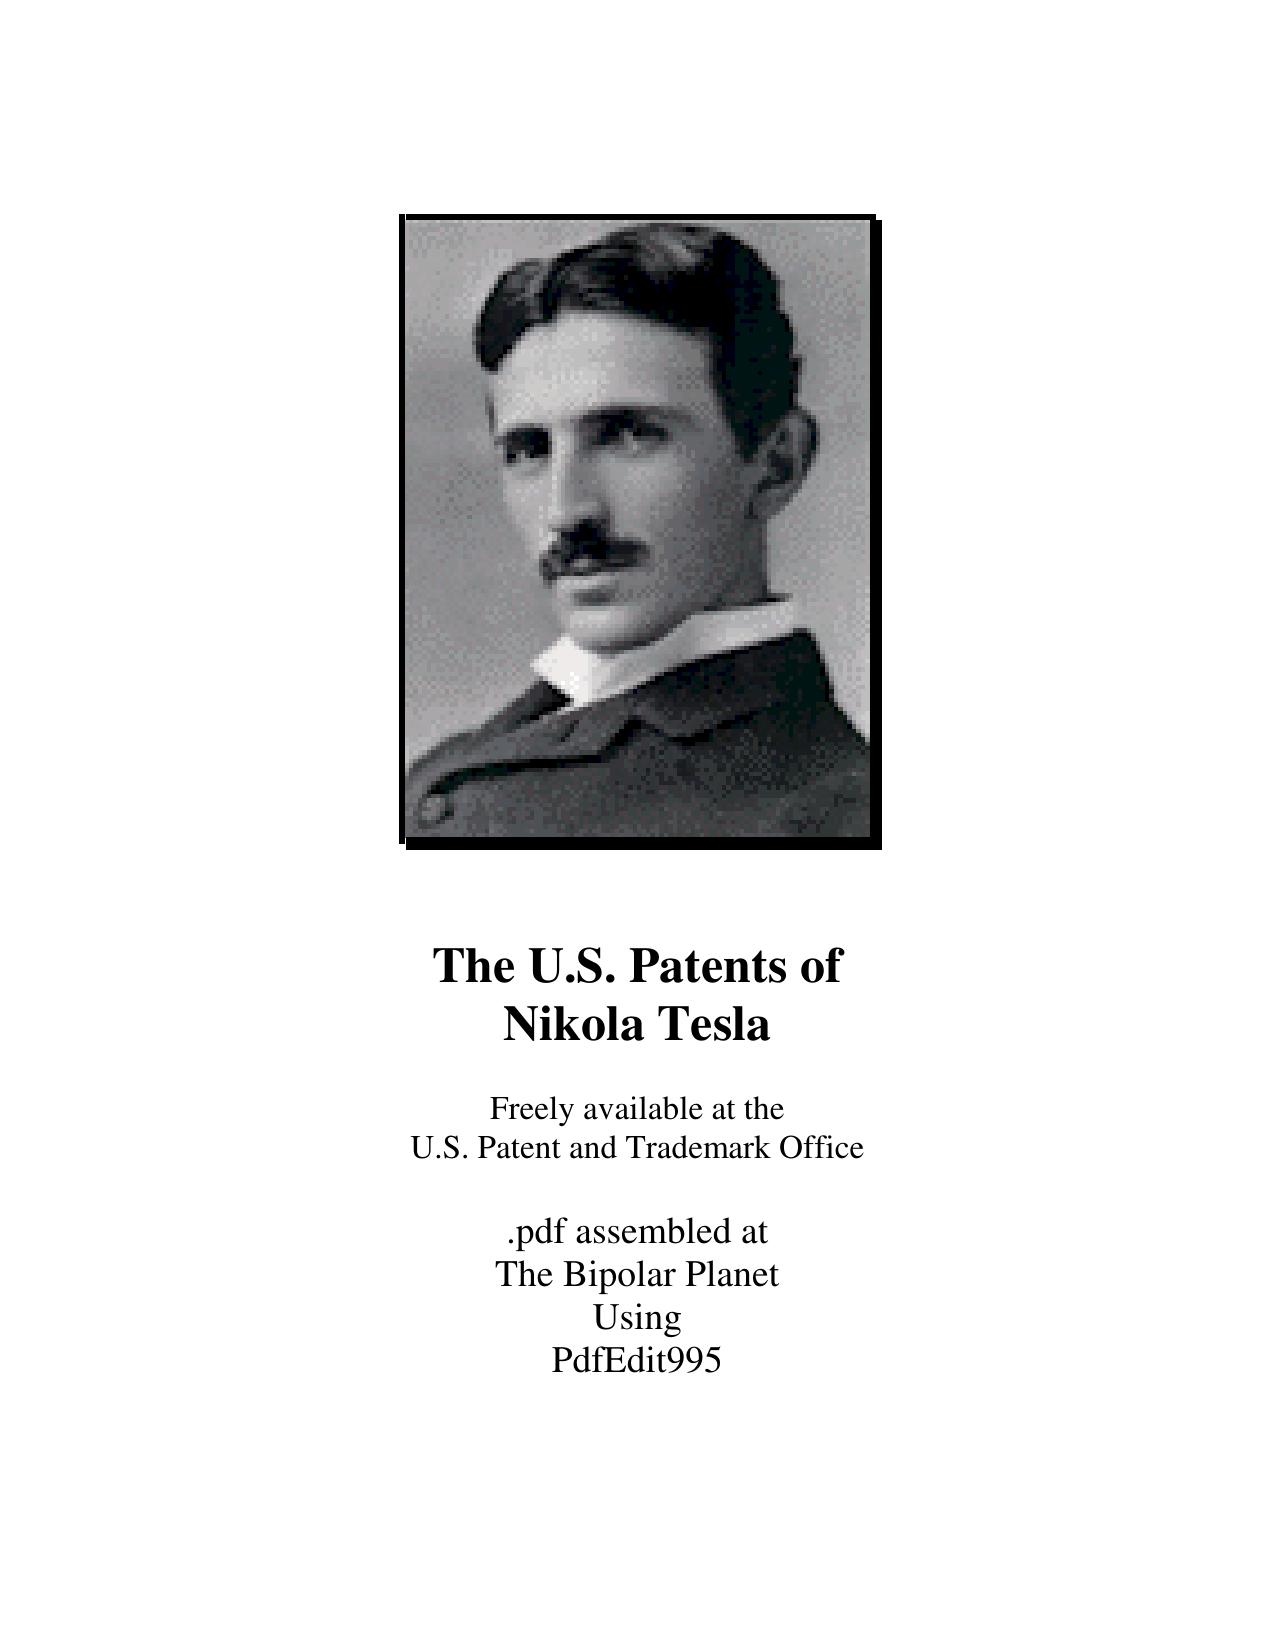 The U.S. Patents of Nikola Tesla